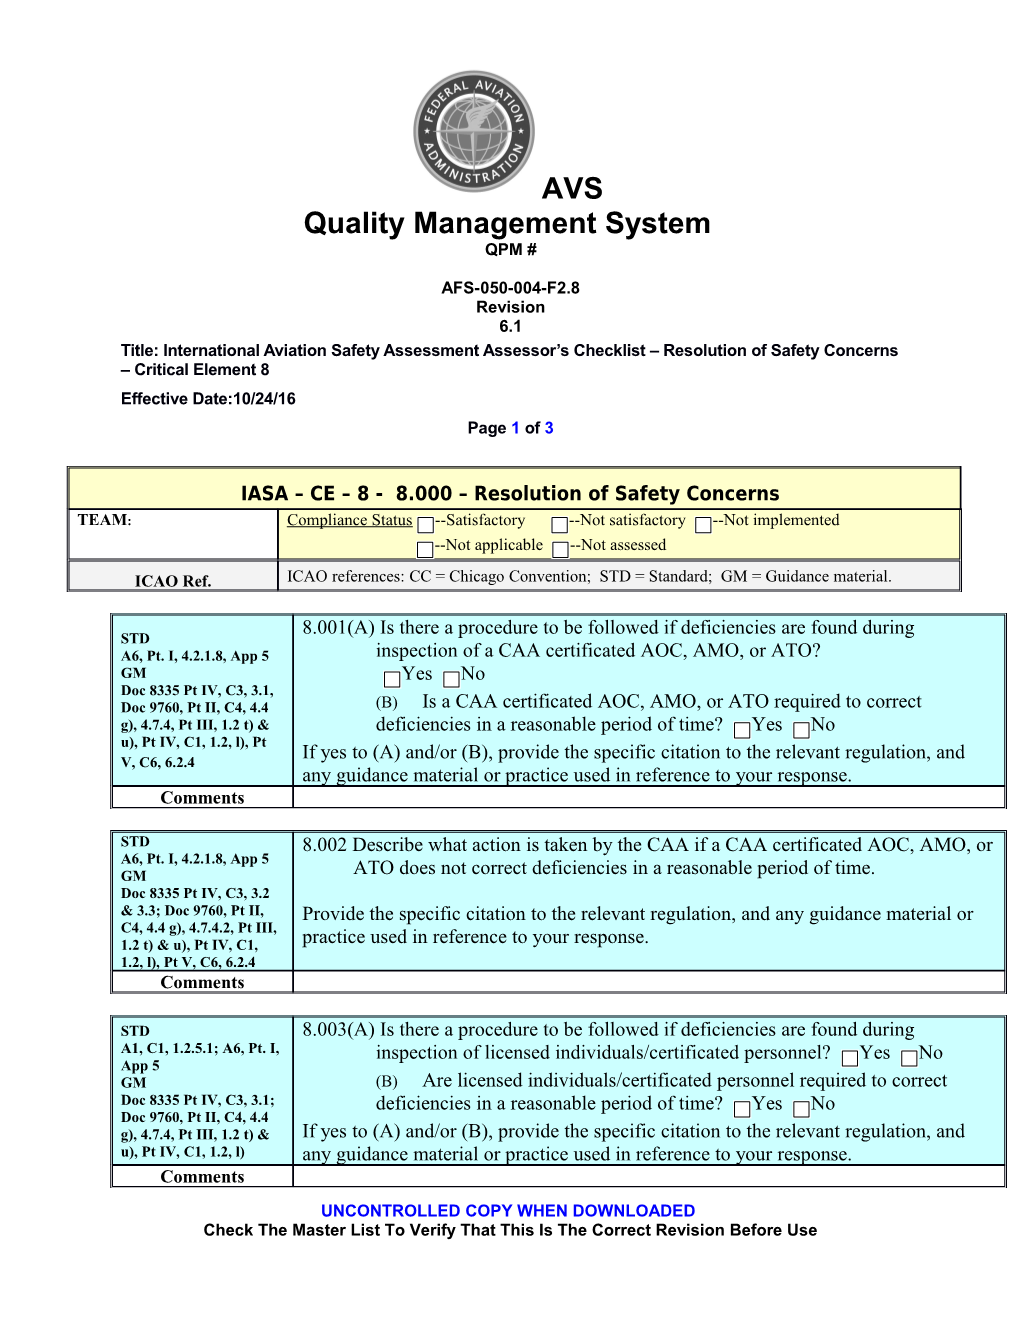 International Aviation Safety Assessment Assessor's Checklist - Resolution of Safety Concerns